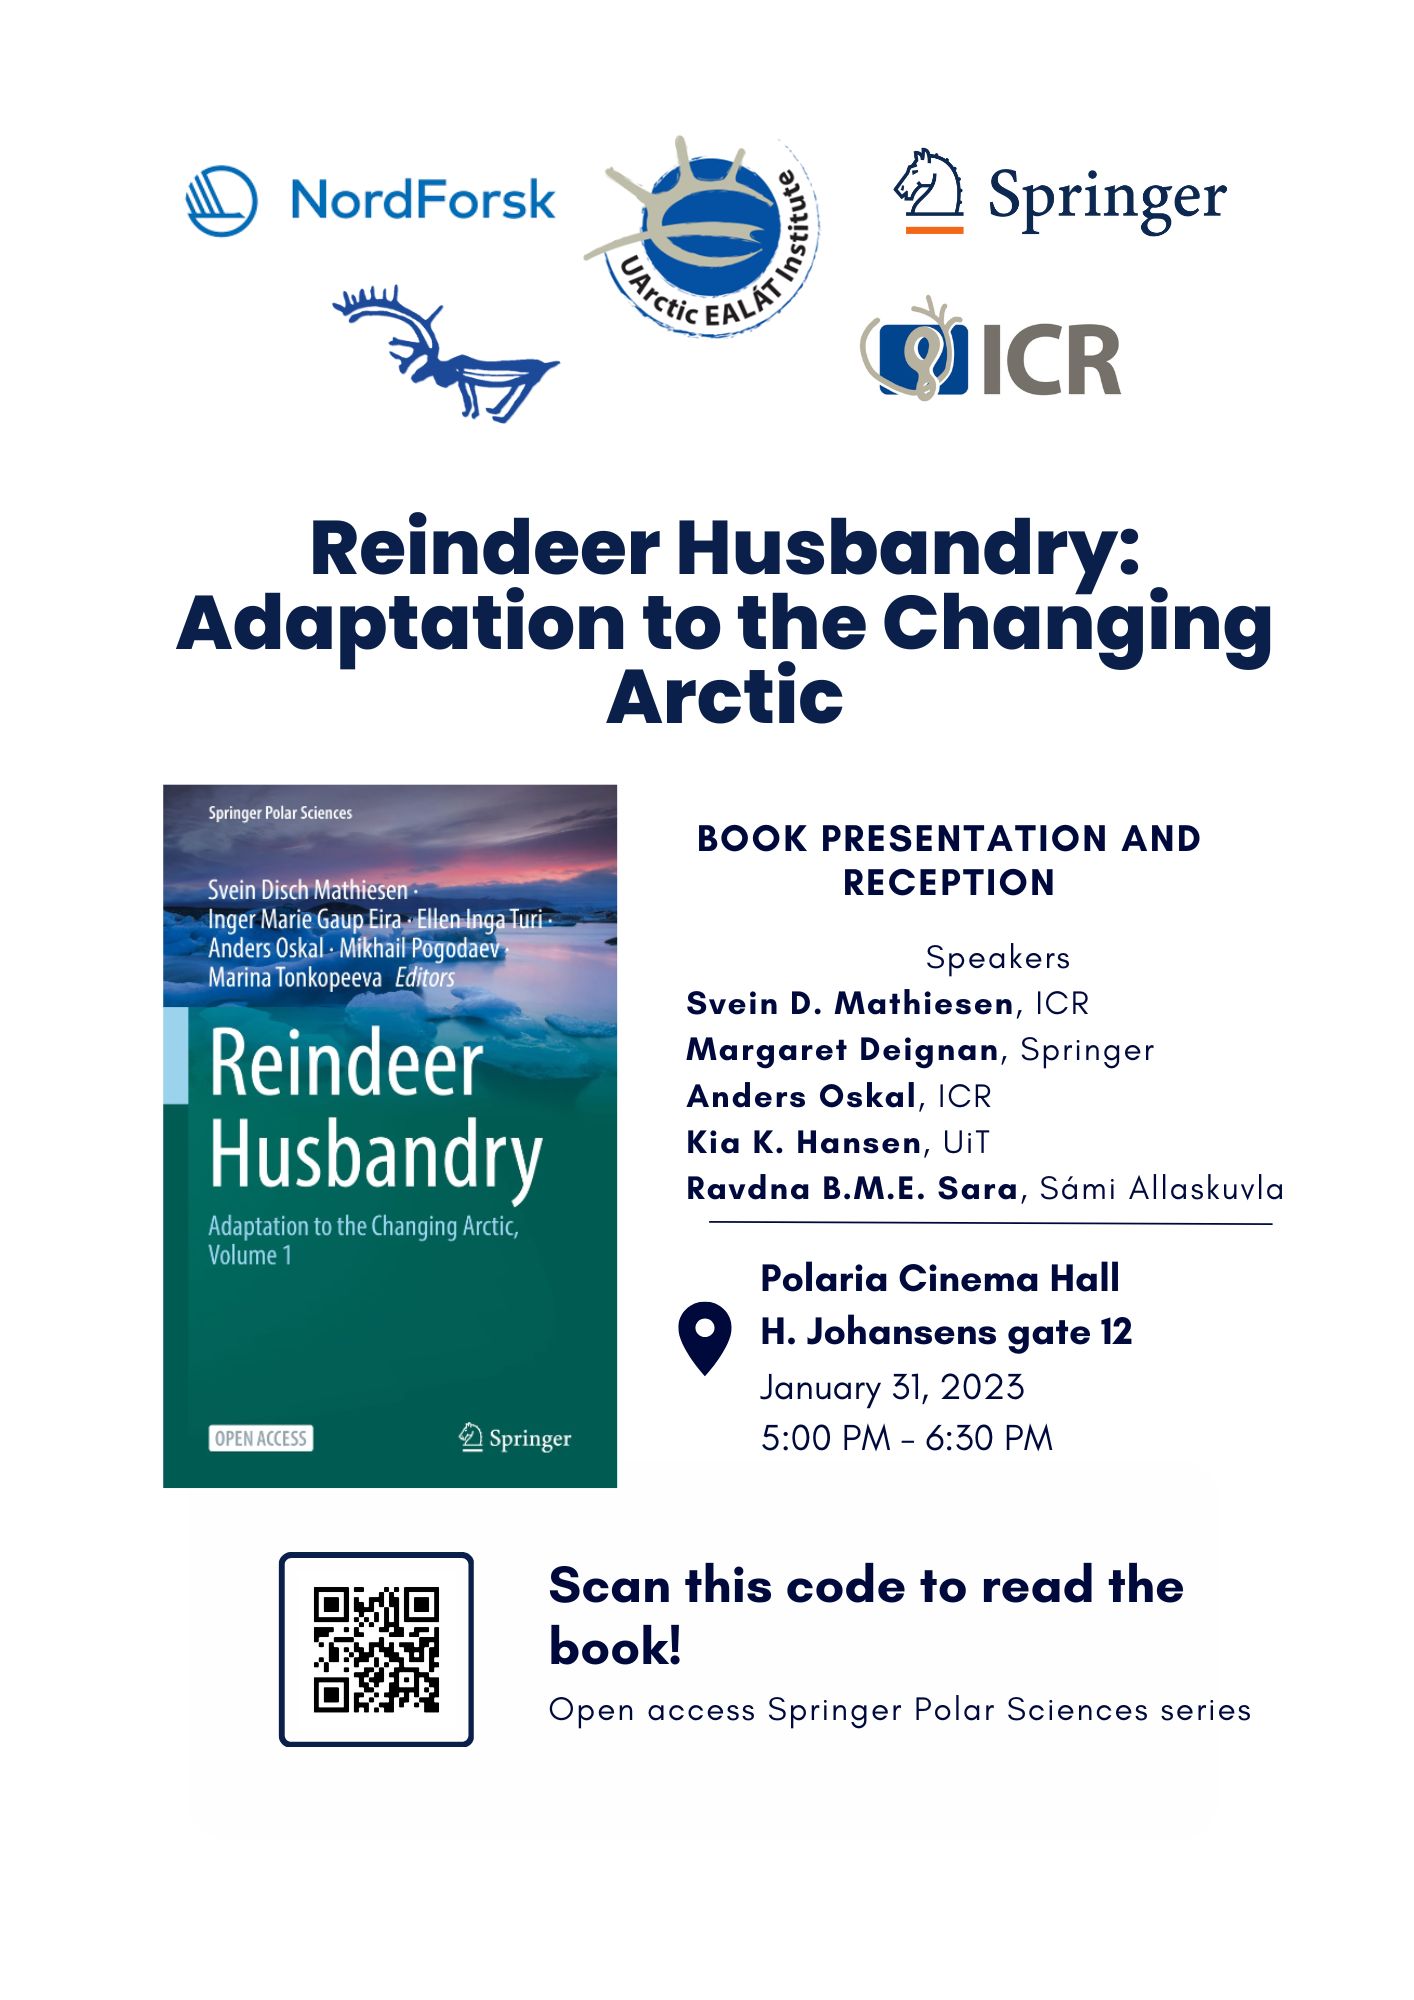 Reindeer Husbandry book presentation today in Tromso